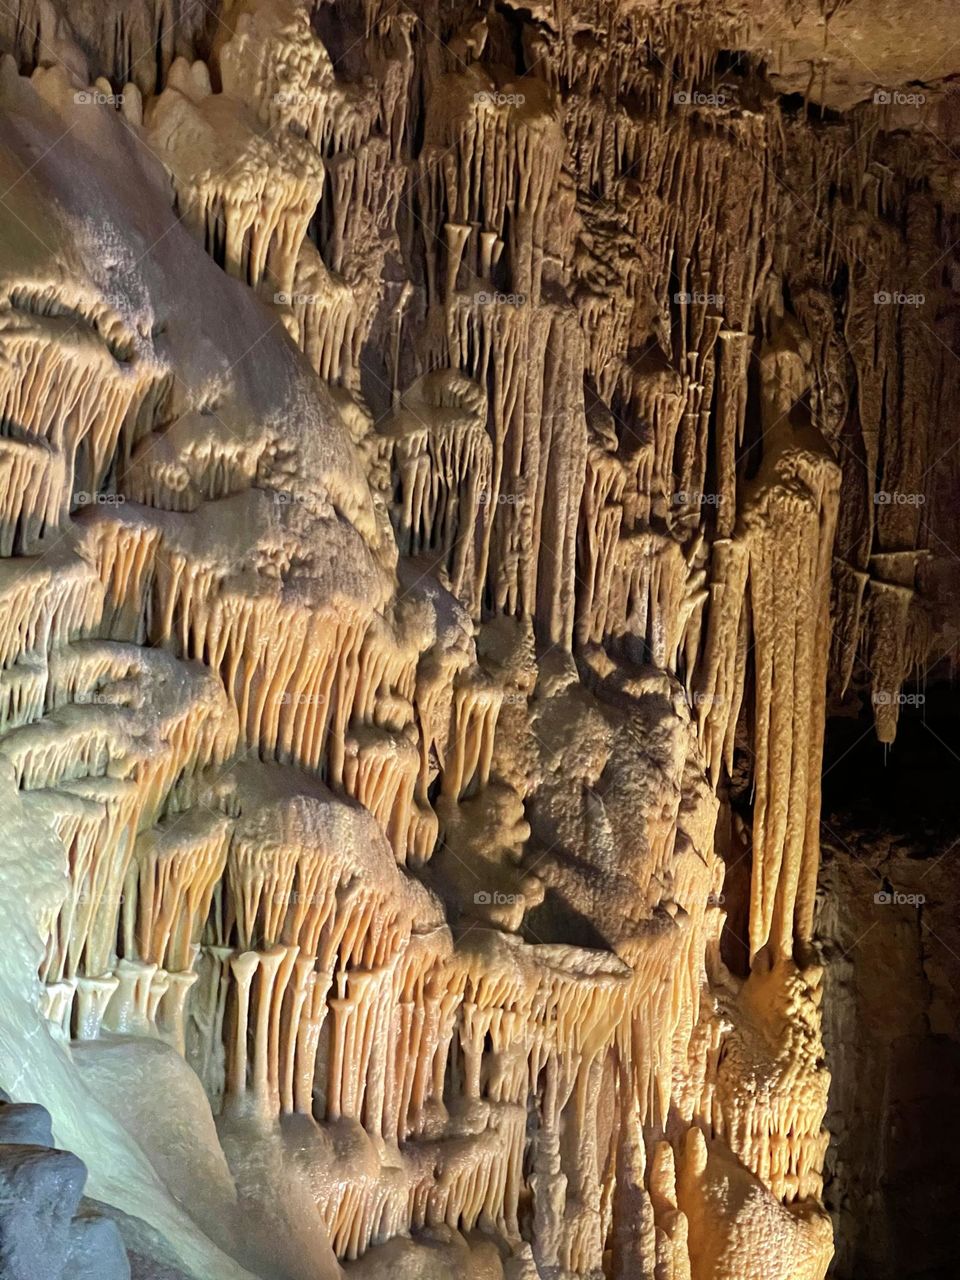 The Cavern: Up close 